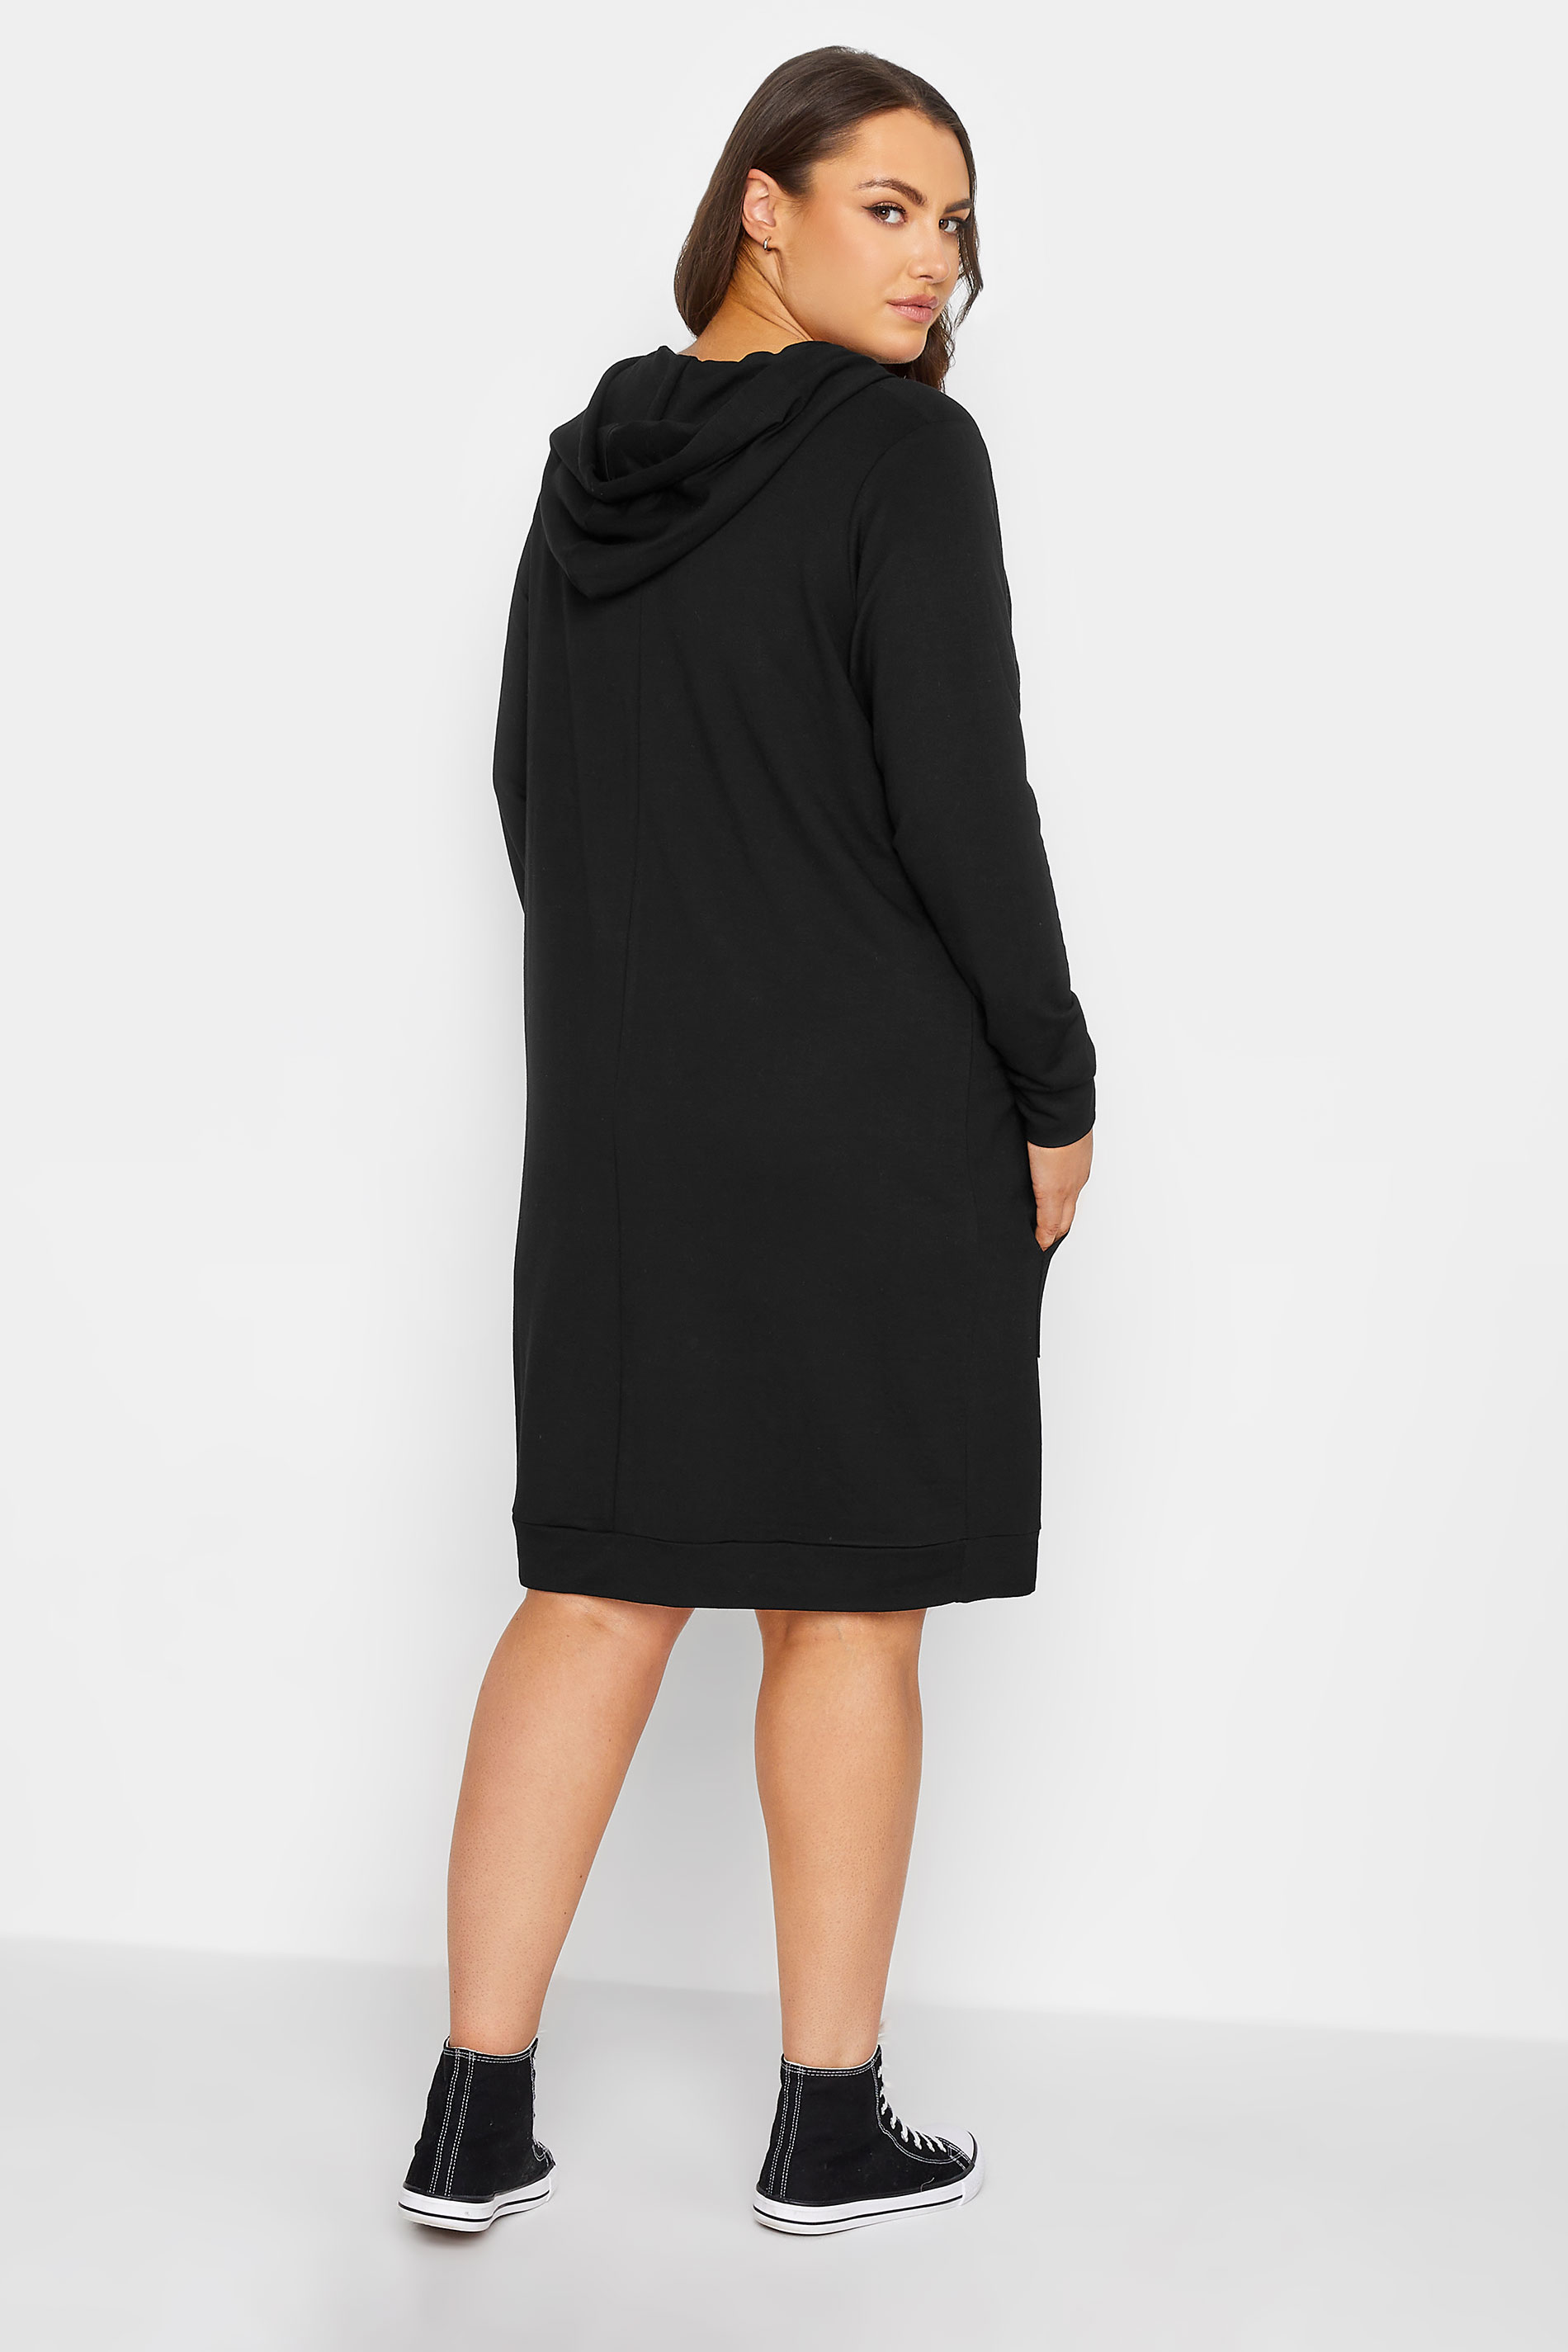 Curve Plus Size Black Hoodie Midi Dress | Yours Clothing 3